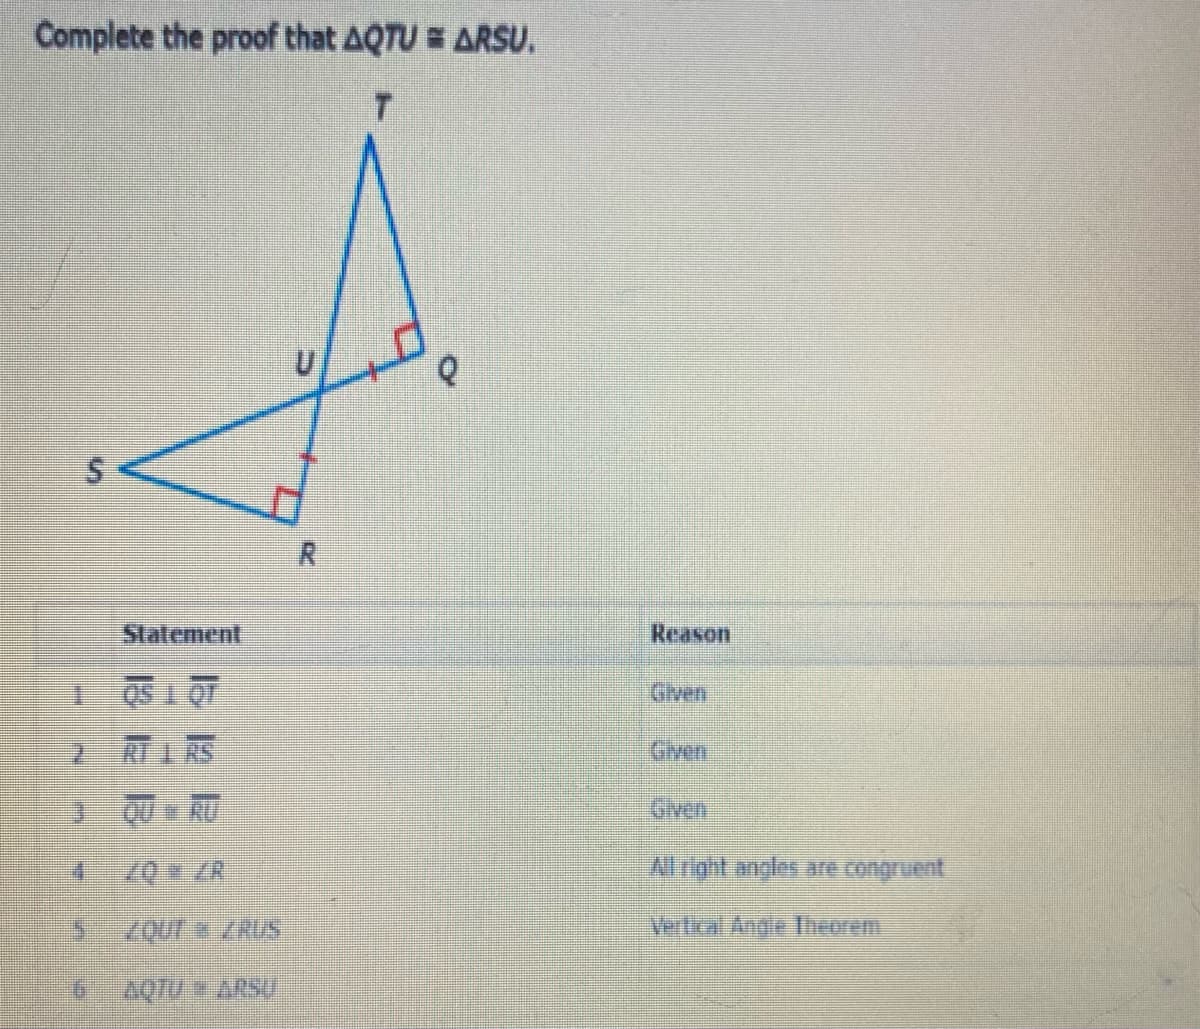 Complete the proof that AQTU = ARSU.
Statement
Reason
Given
10 T SO
RT I AS
Given
J QU RU
Gven
Al right angles are congruent
QUr ZRUS
Vertical Angle orrm
AQTU ARSU
